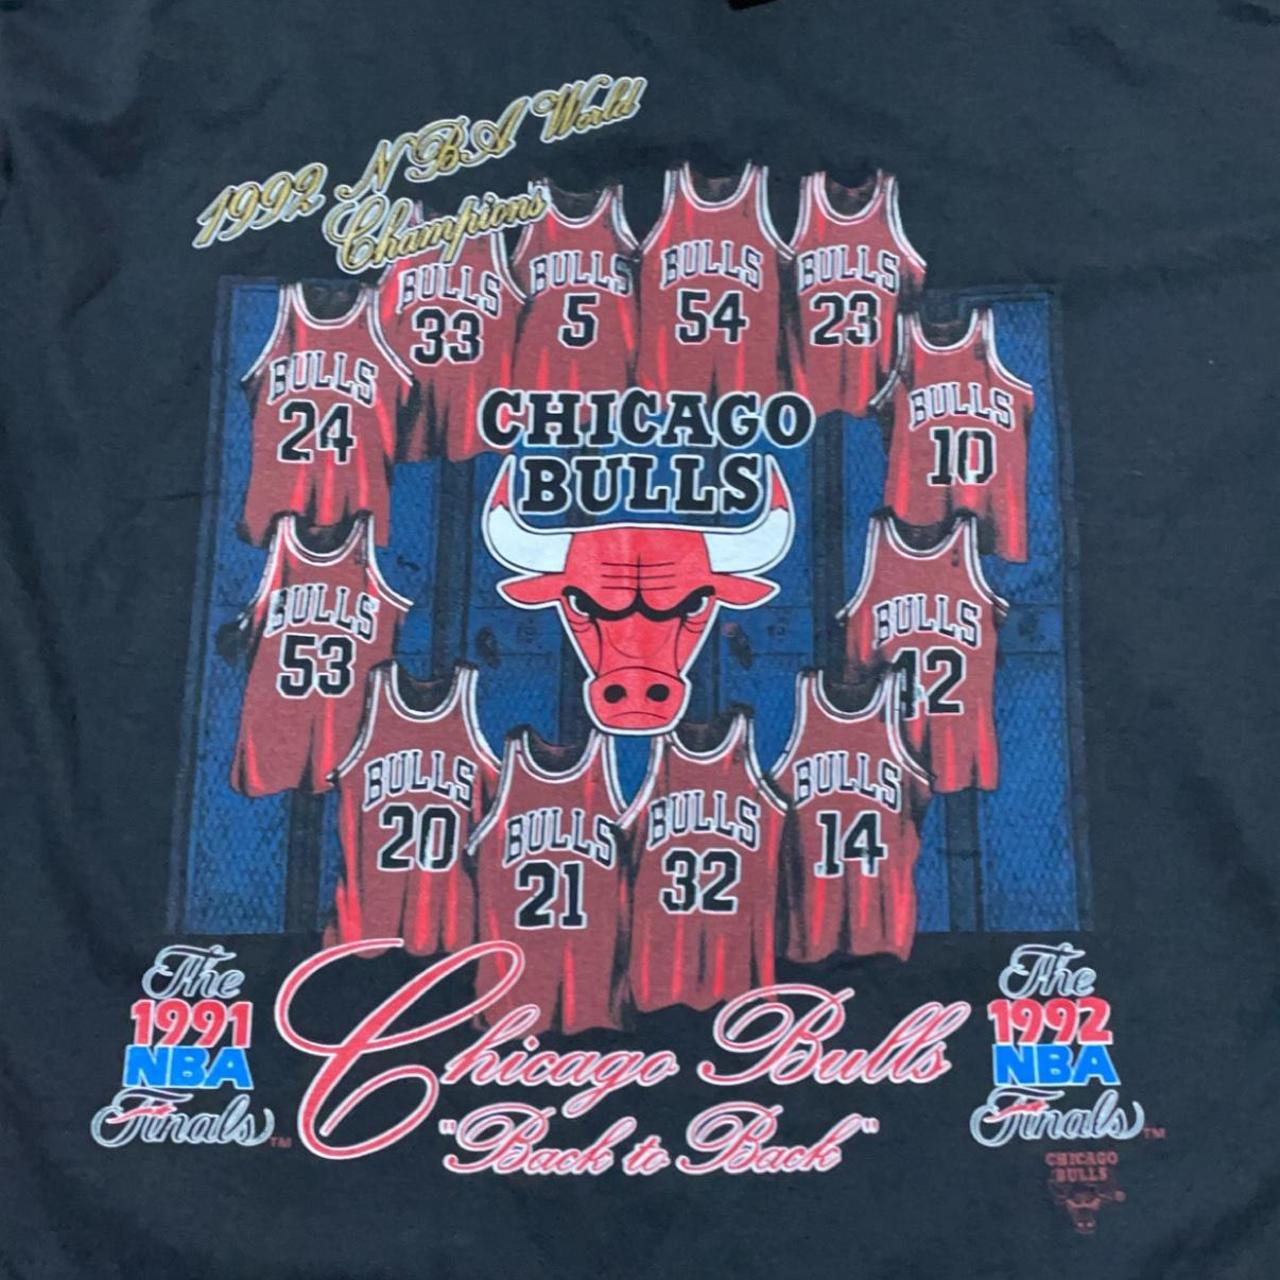 Vintage NBA (Nutmeg) - Chicago Bulls NBA World Champions T-Shirt 1991 X-Large